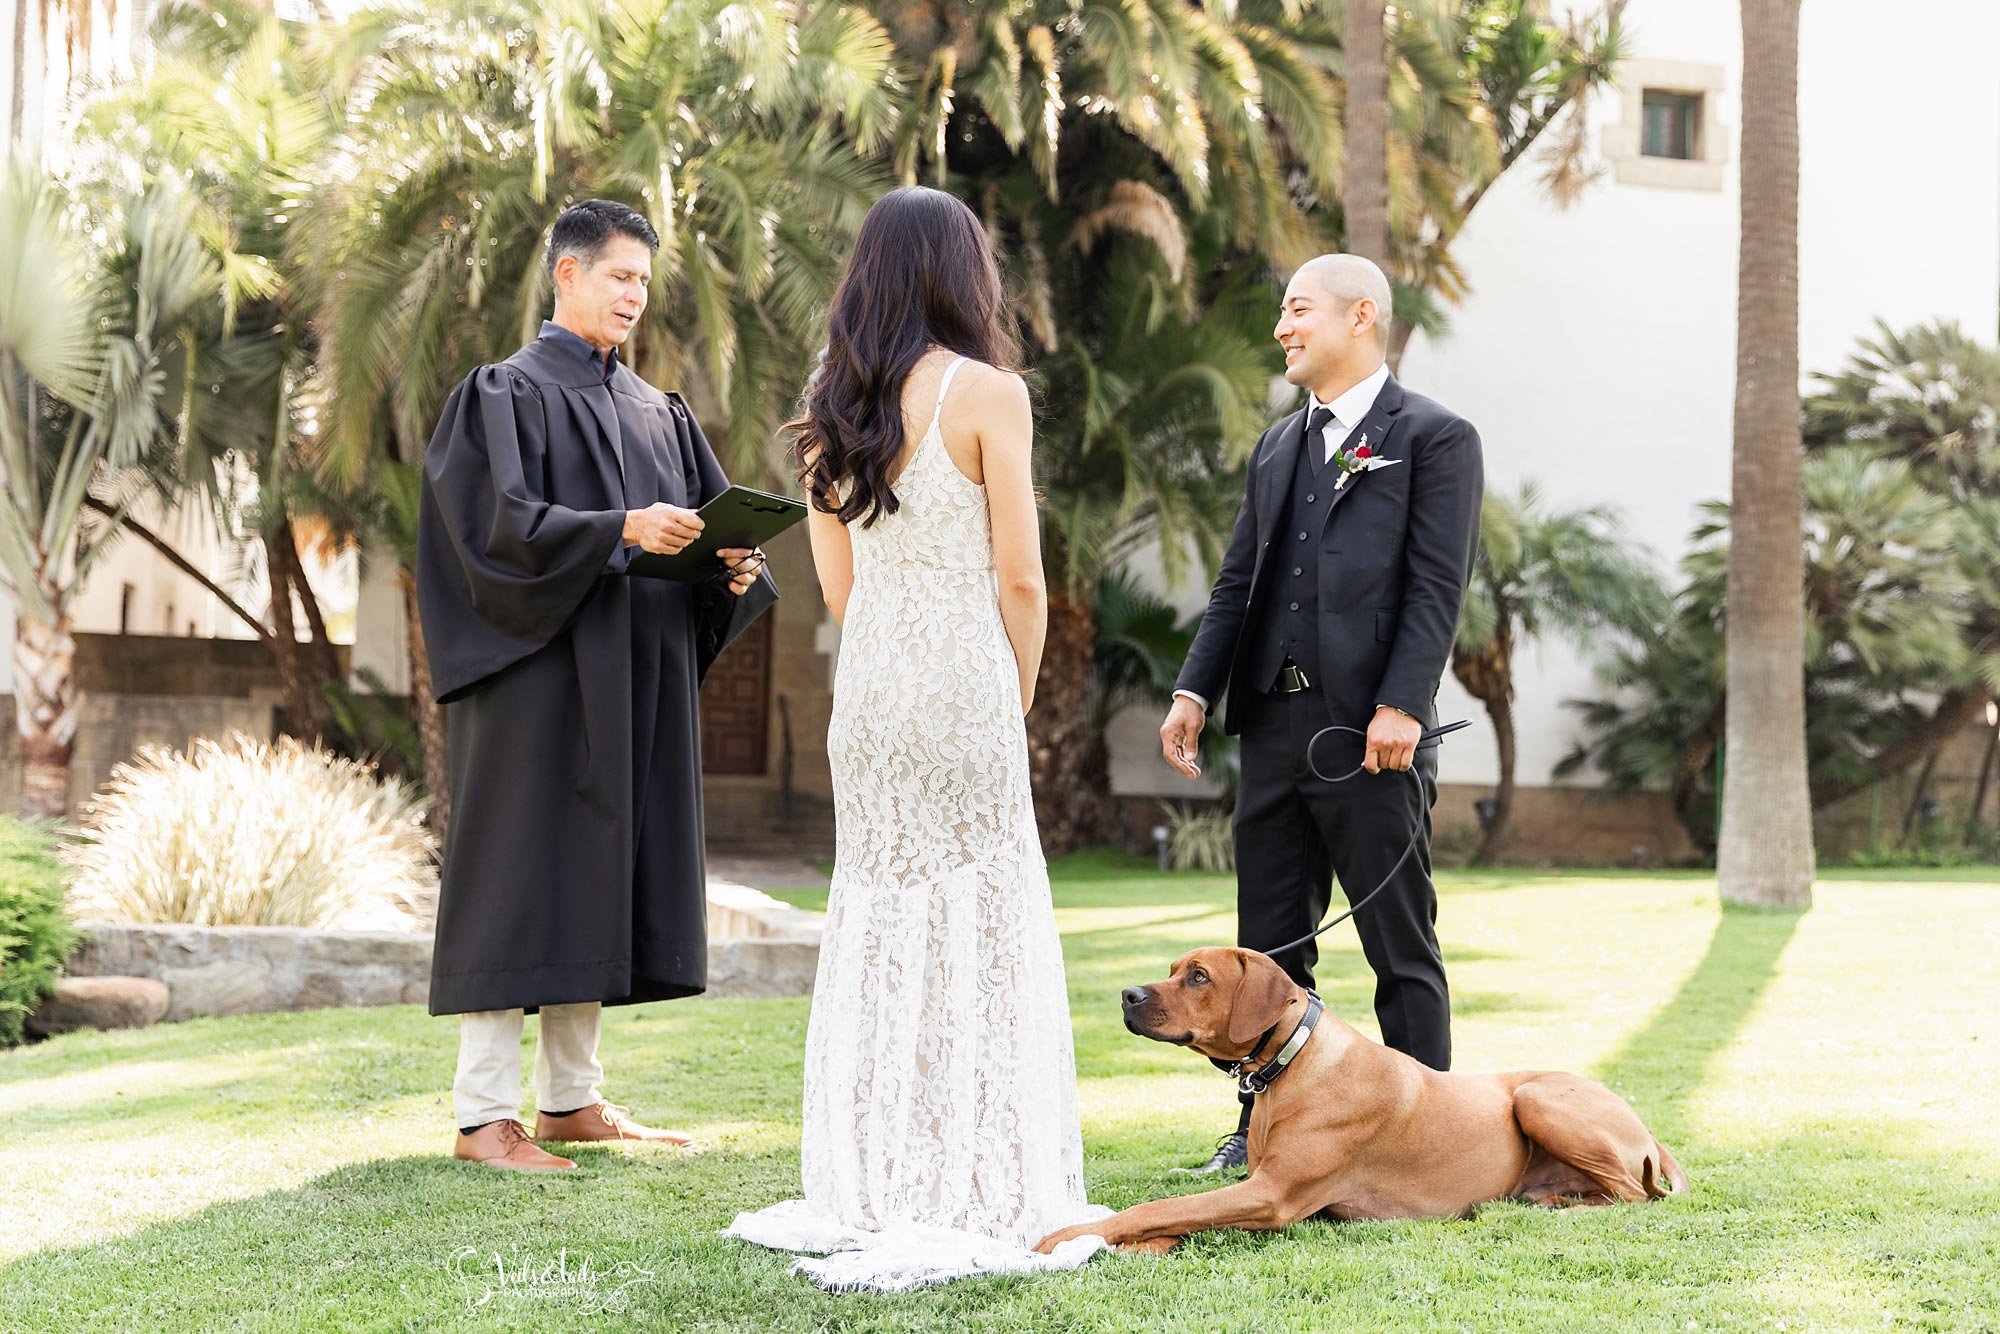 Santa Barbara Courthouse wedding with the dog